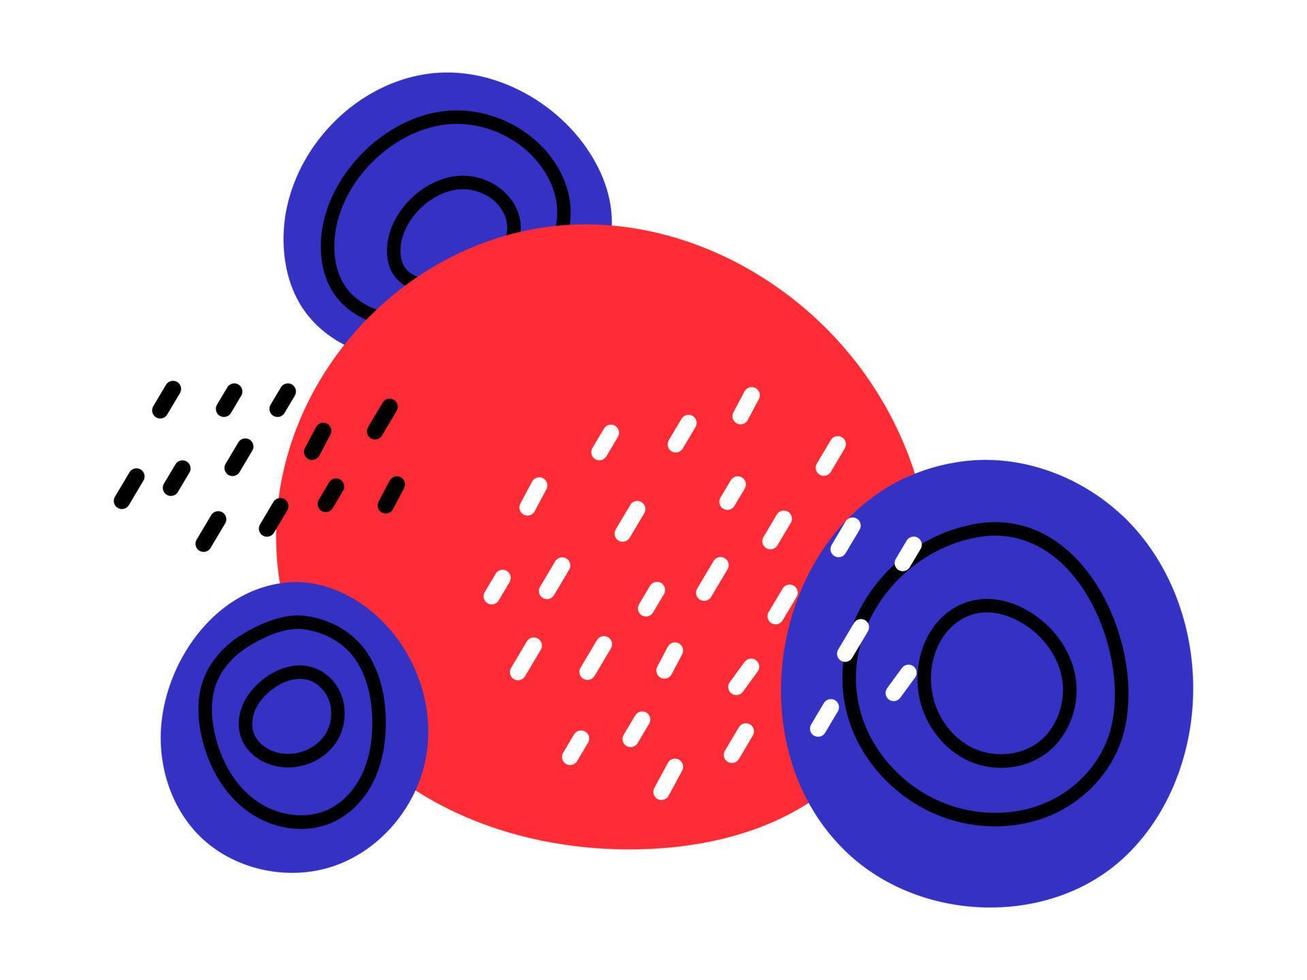 Vector abstract shapes. Big red circle with blue circles. Dots and blots. Modern ornaments. Abstract clip art.